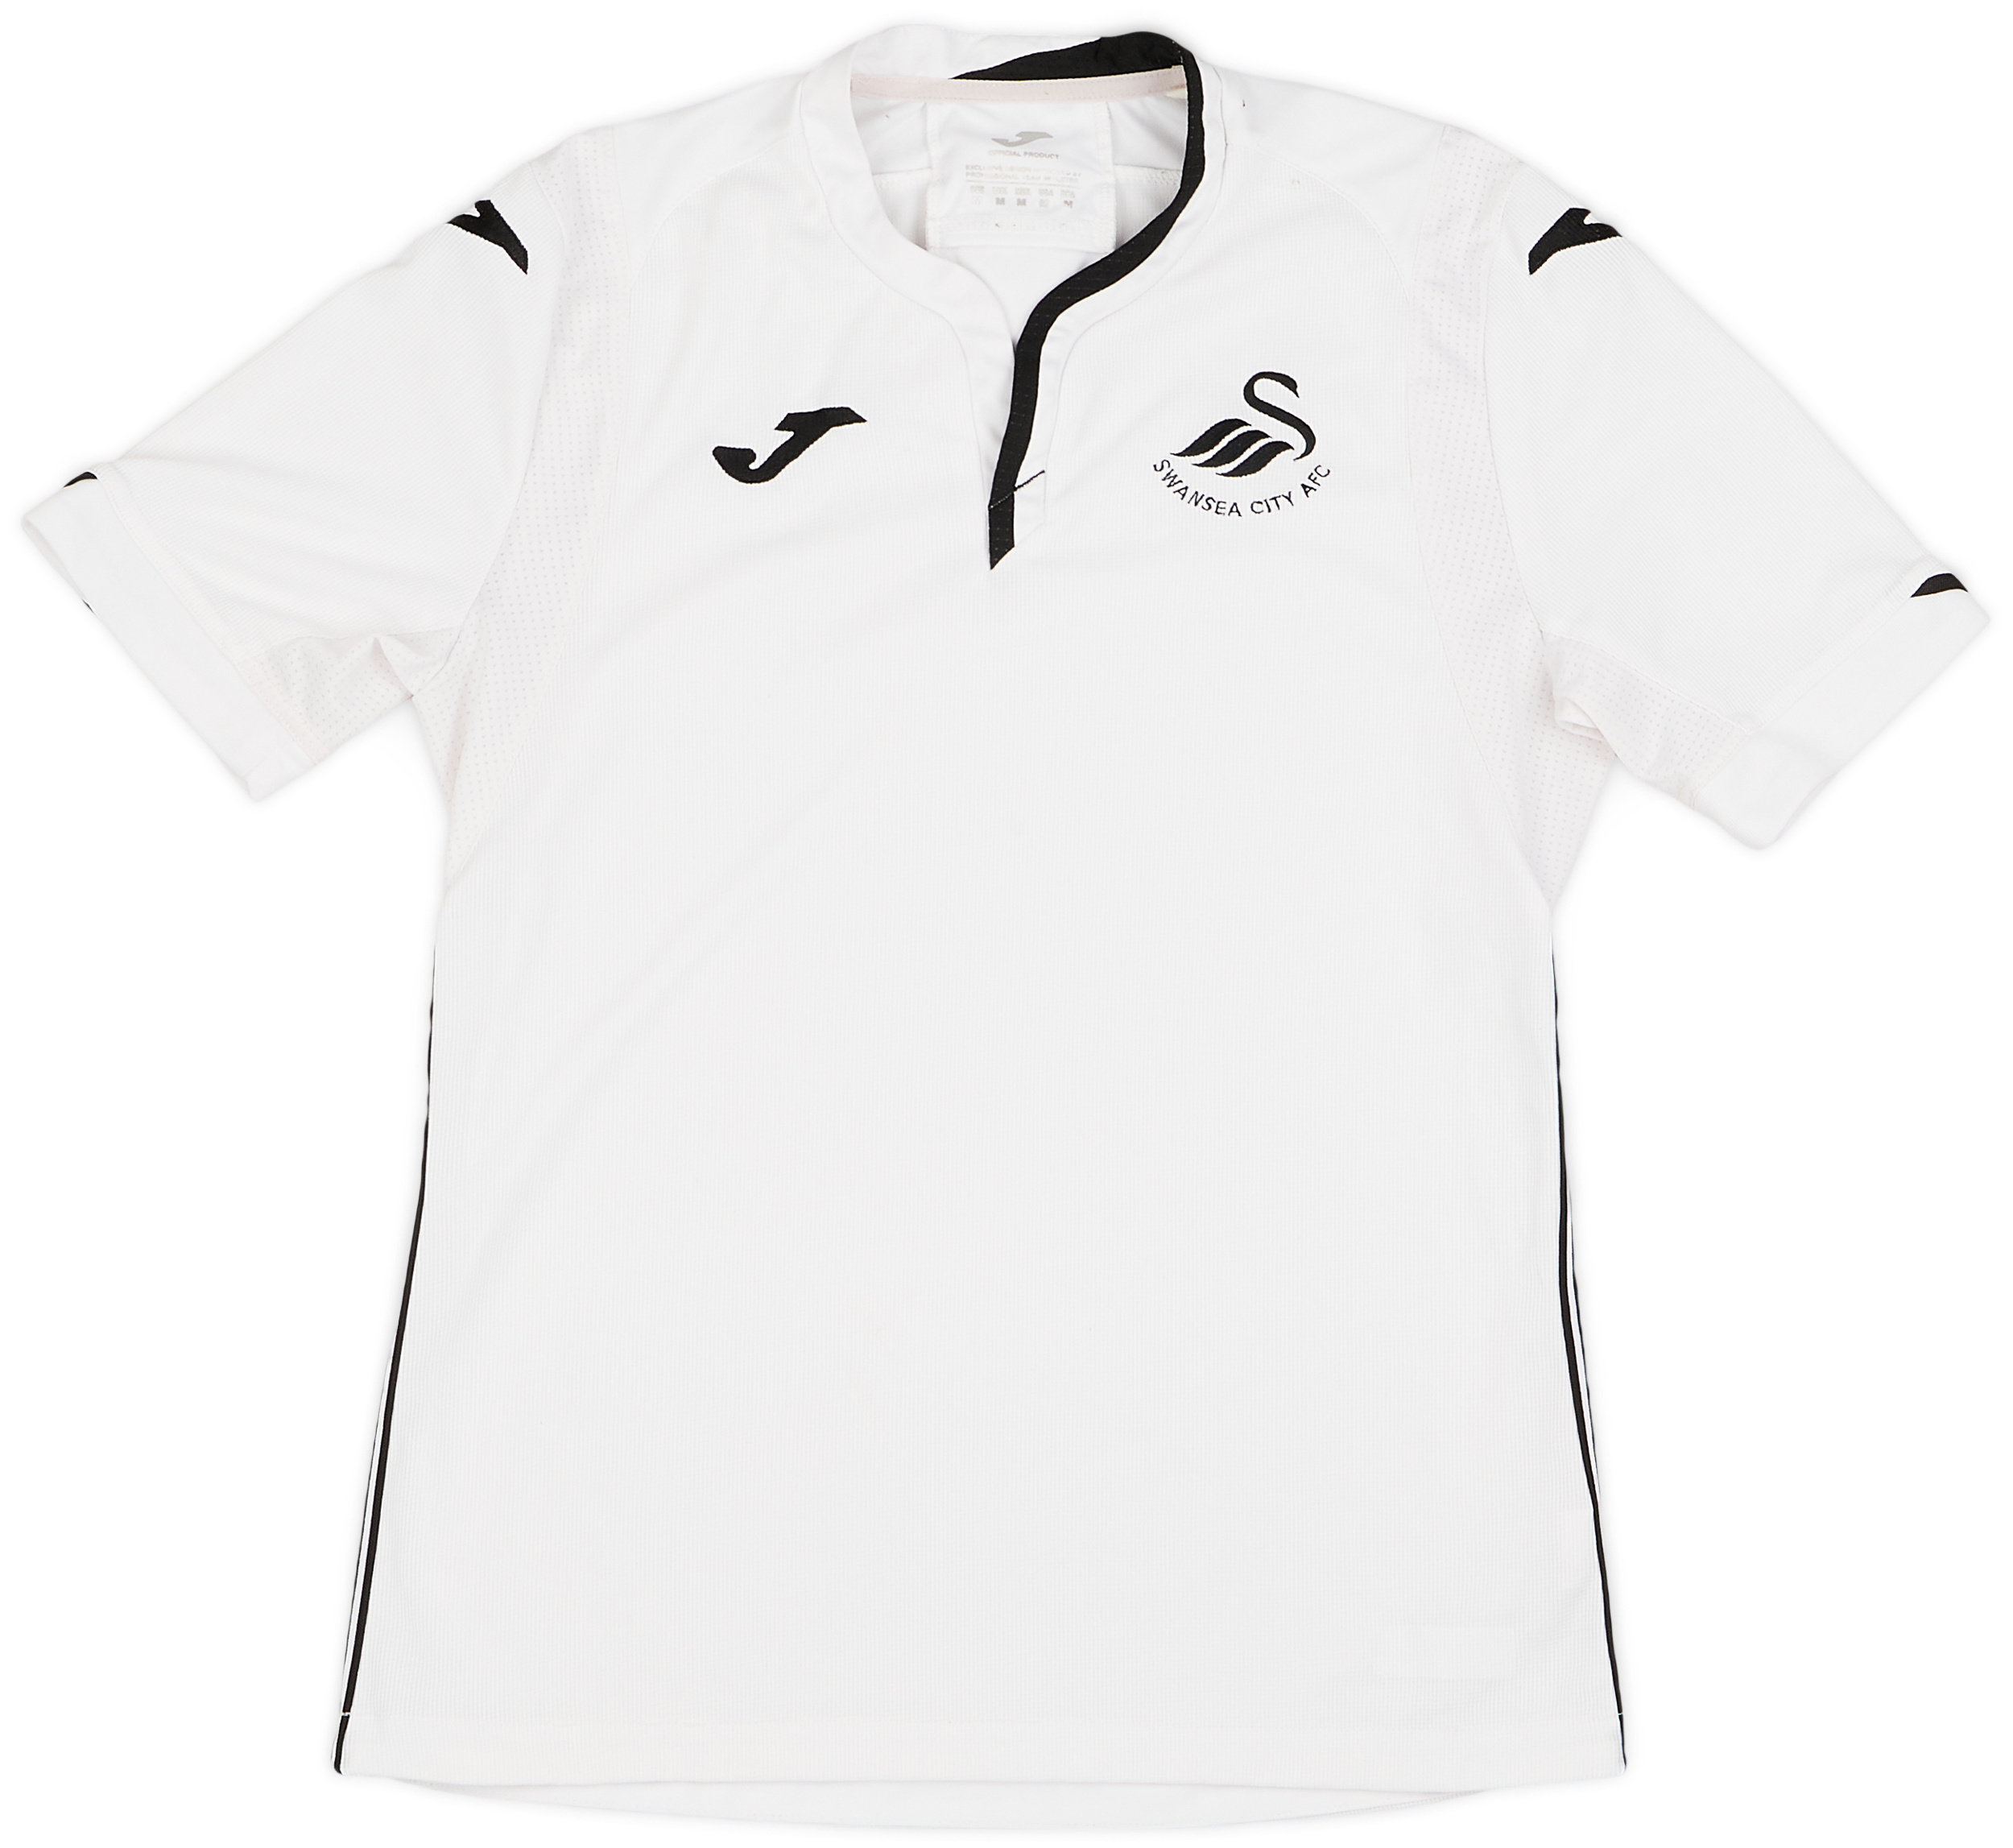 2018-19 Swansea City Home Shirt - 8/10 - ()